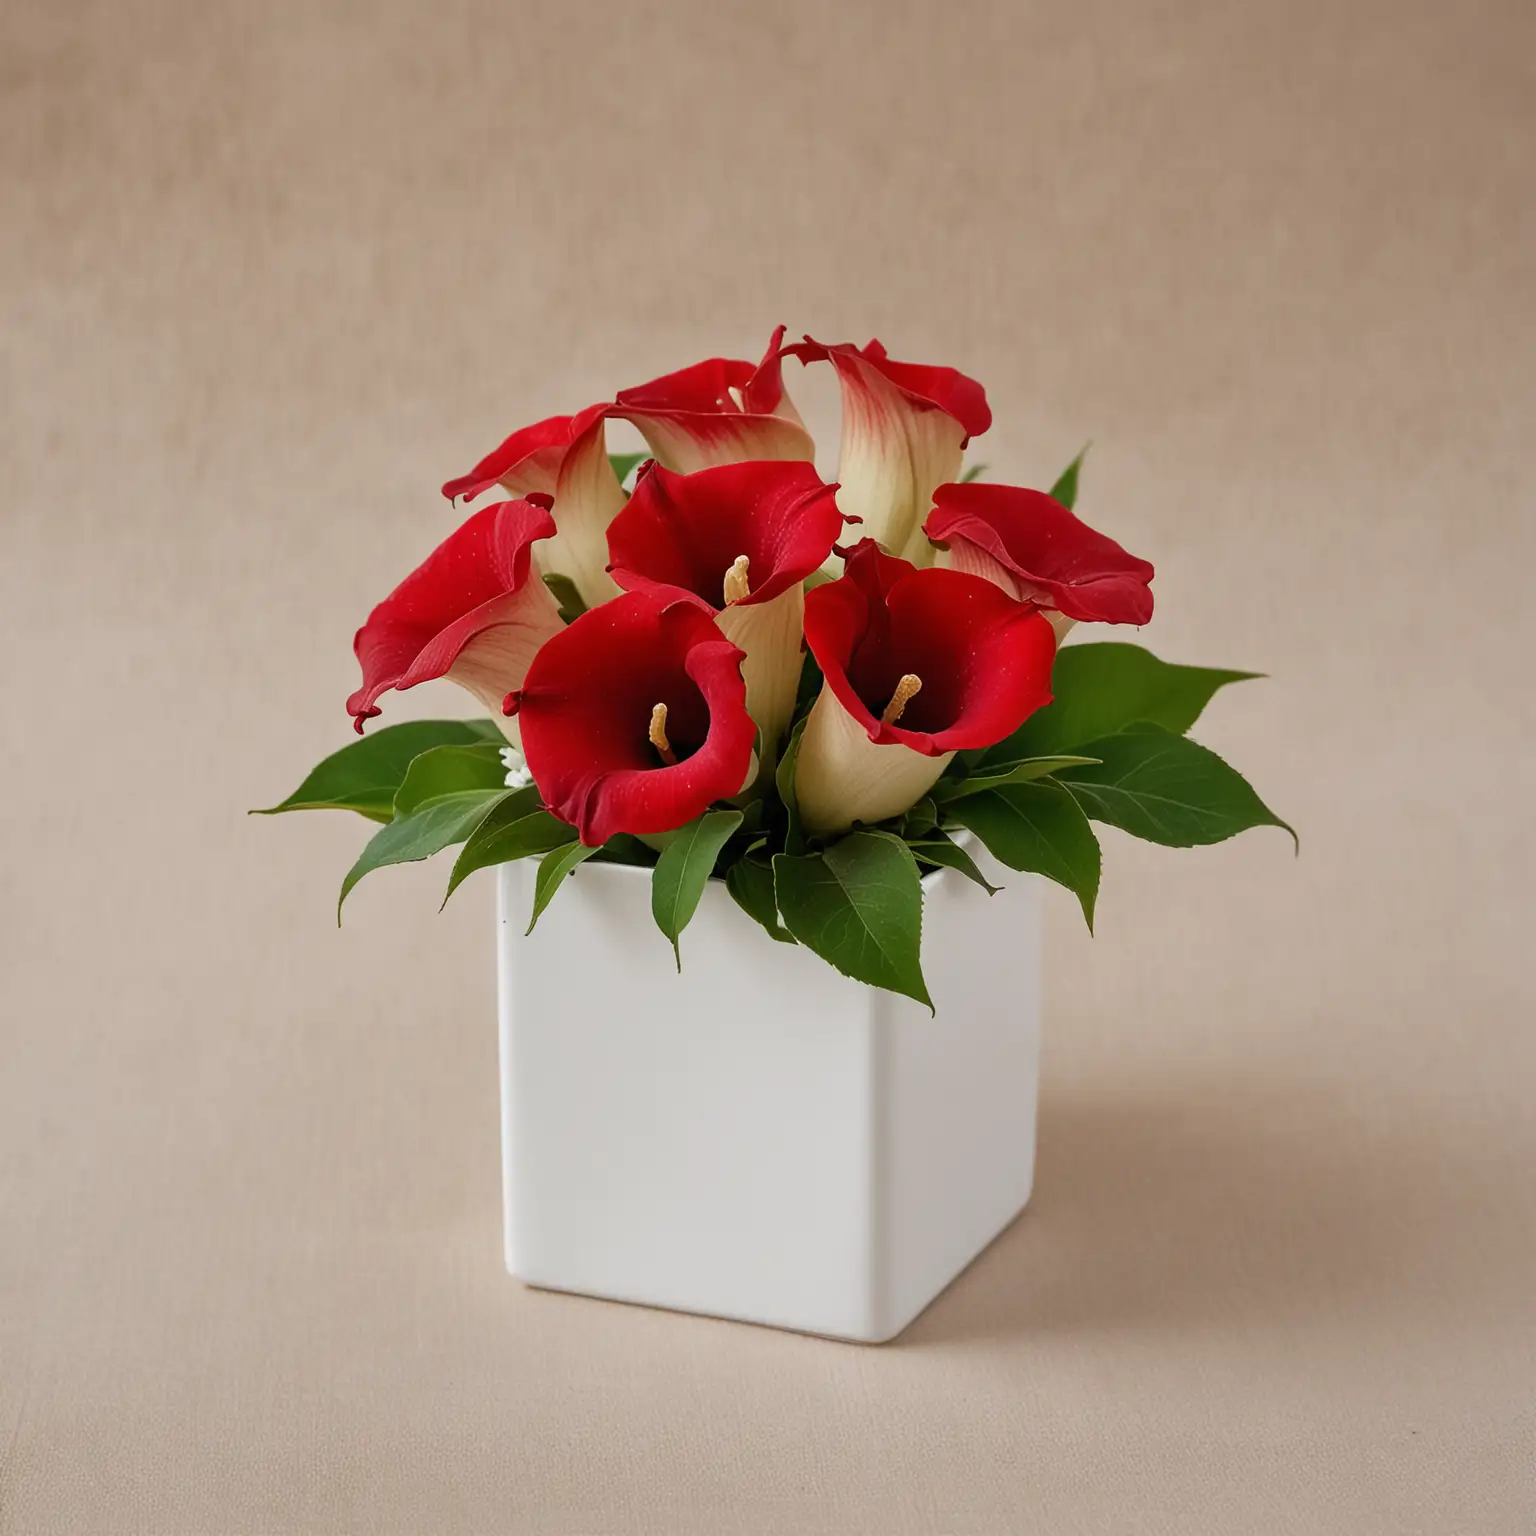 Elegant-Wedding-Centerpiece-Red-Roses-and-Calla-Lilies-in-White-Ceramic-Vase